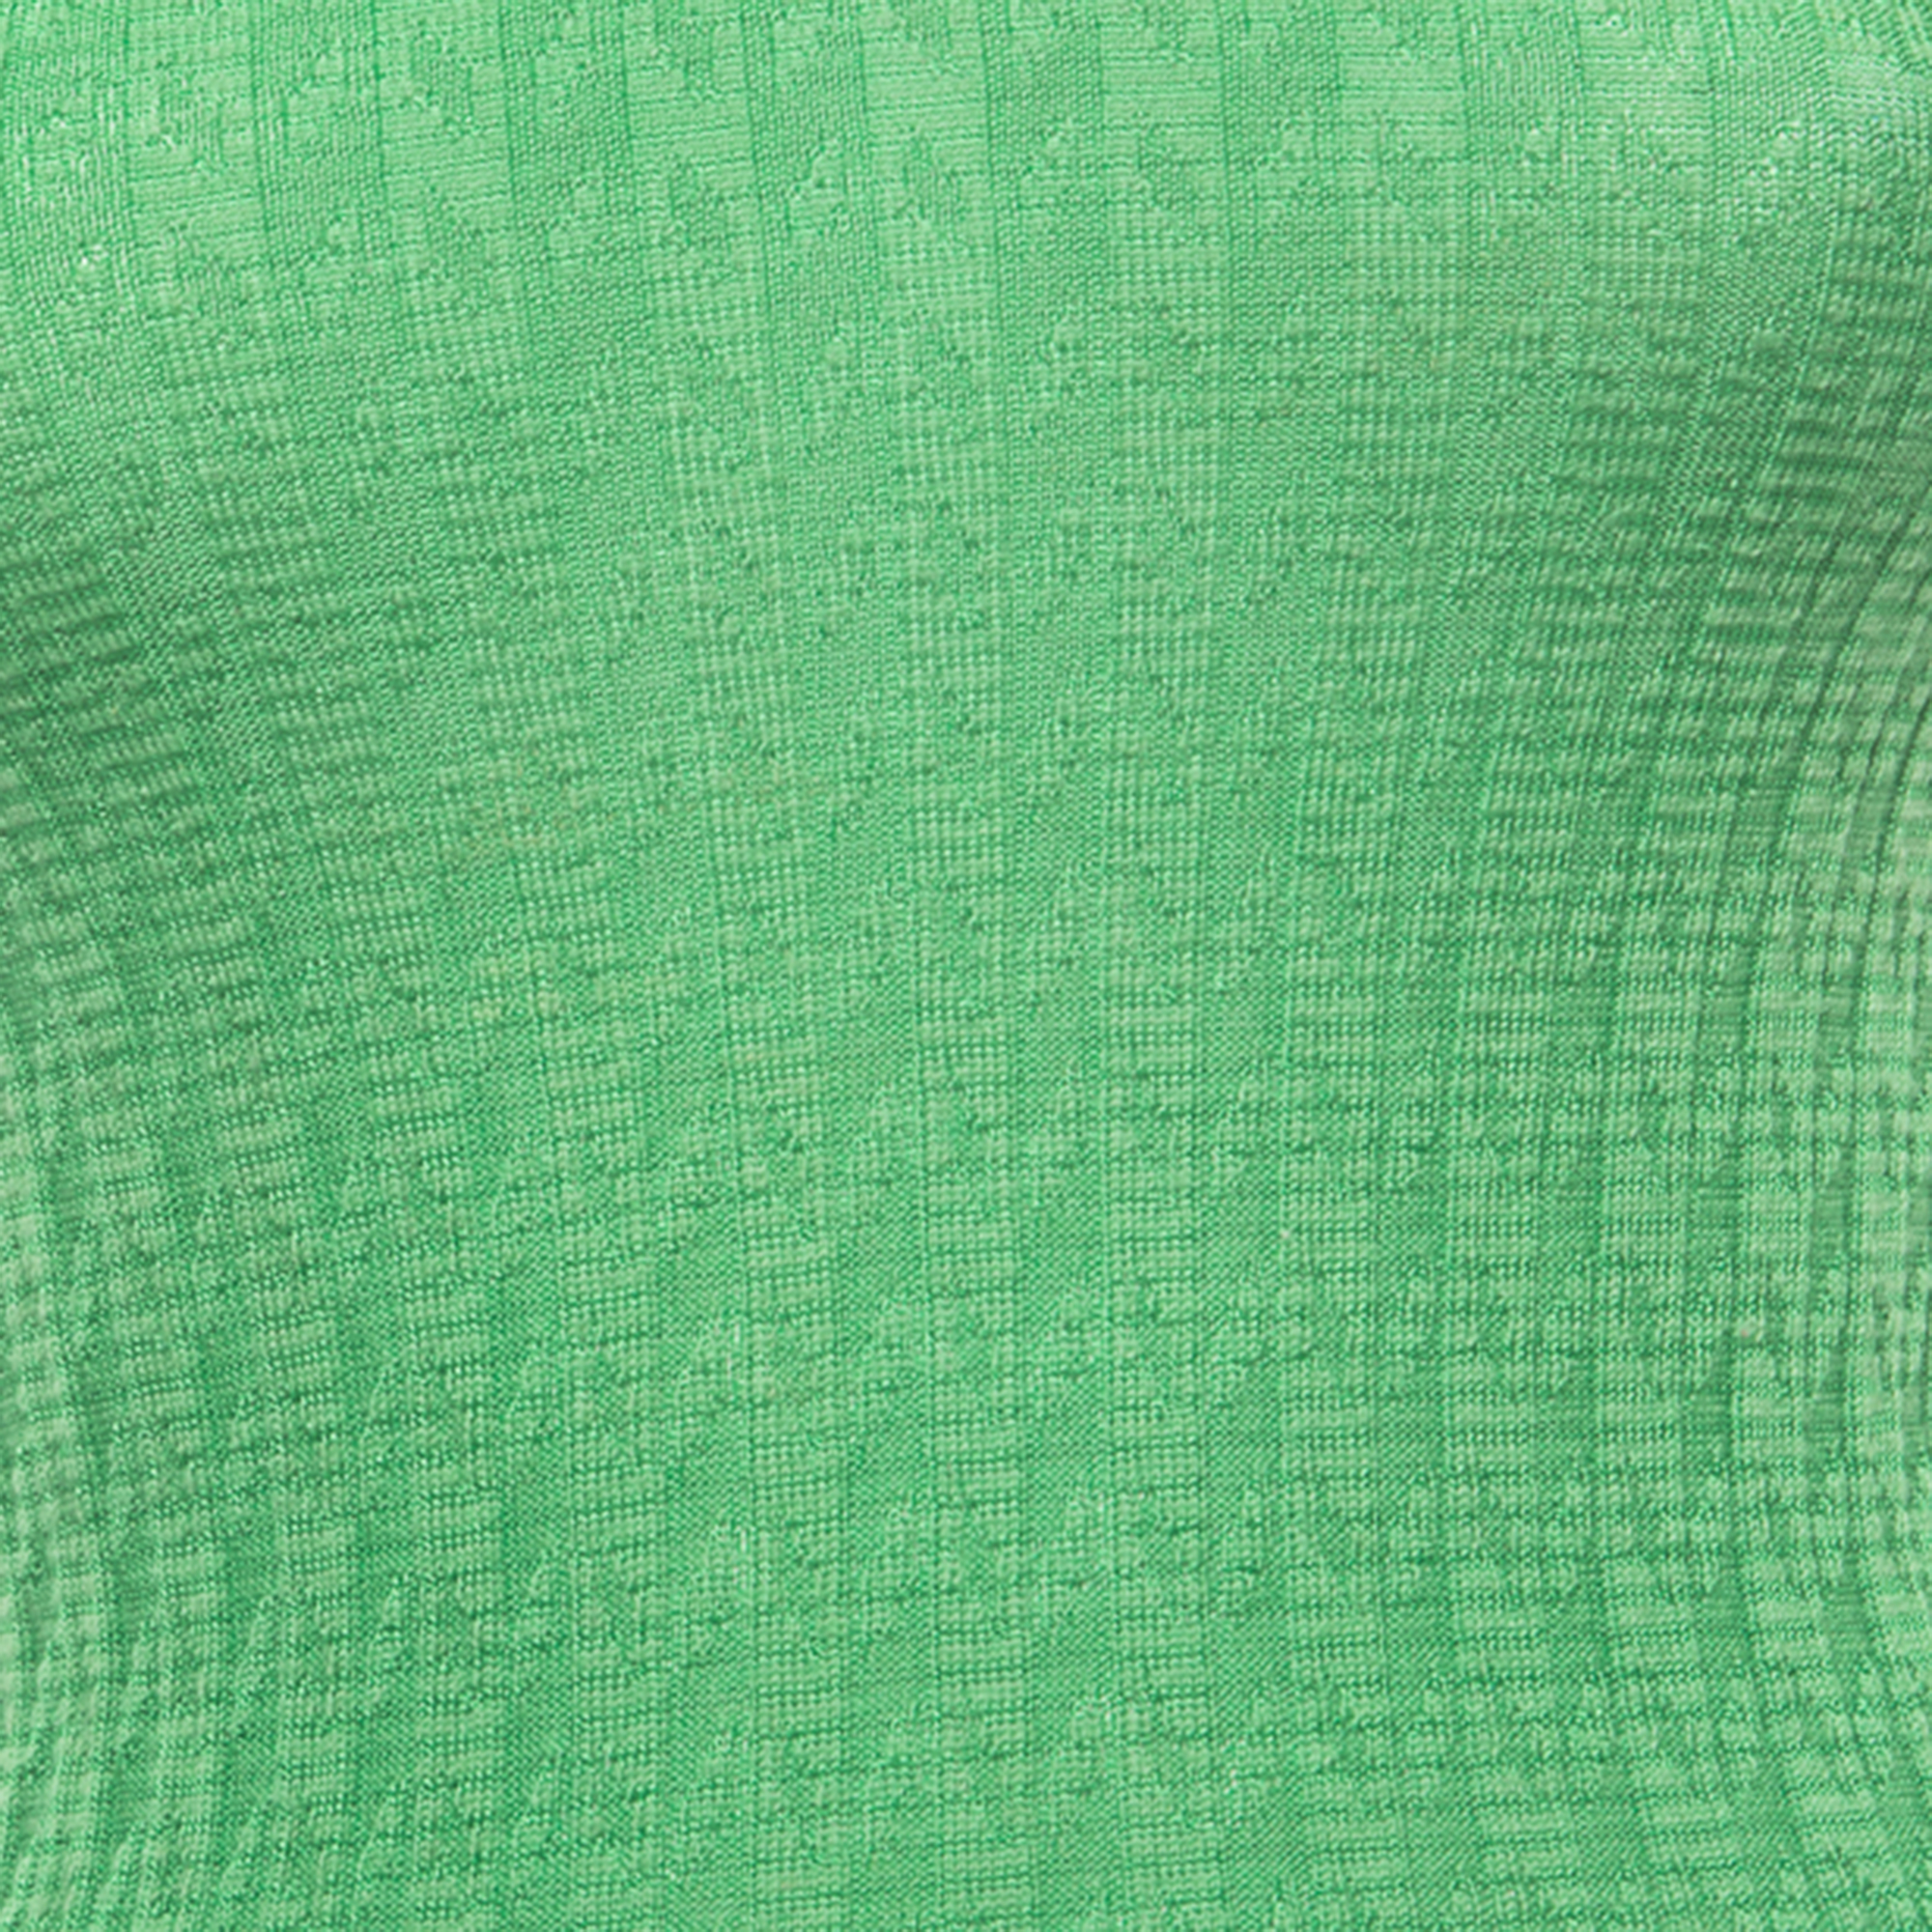 M Missoni Green Patterned Knit V-Neck Top S